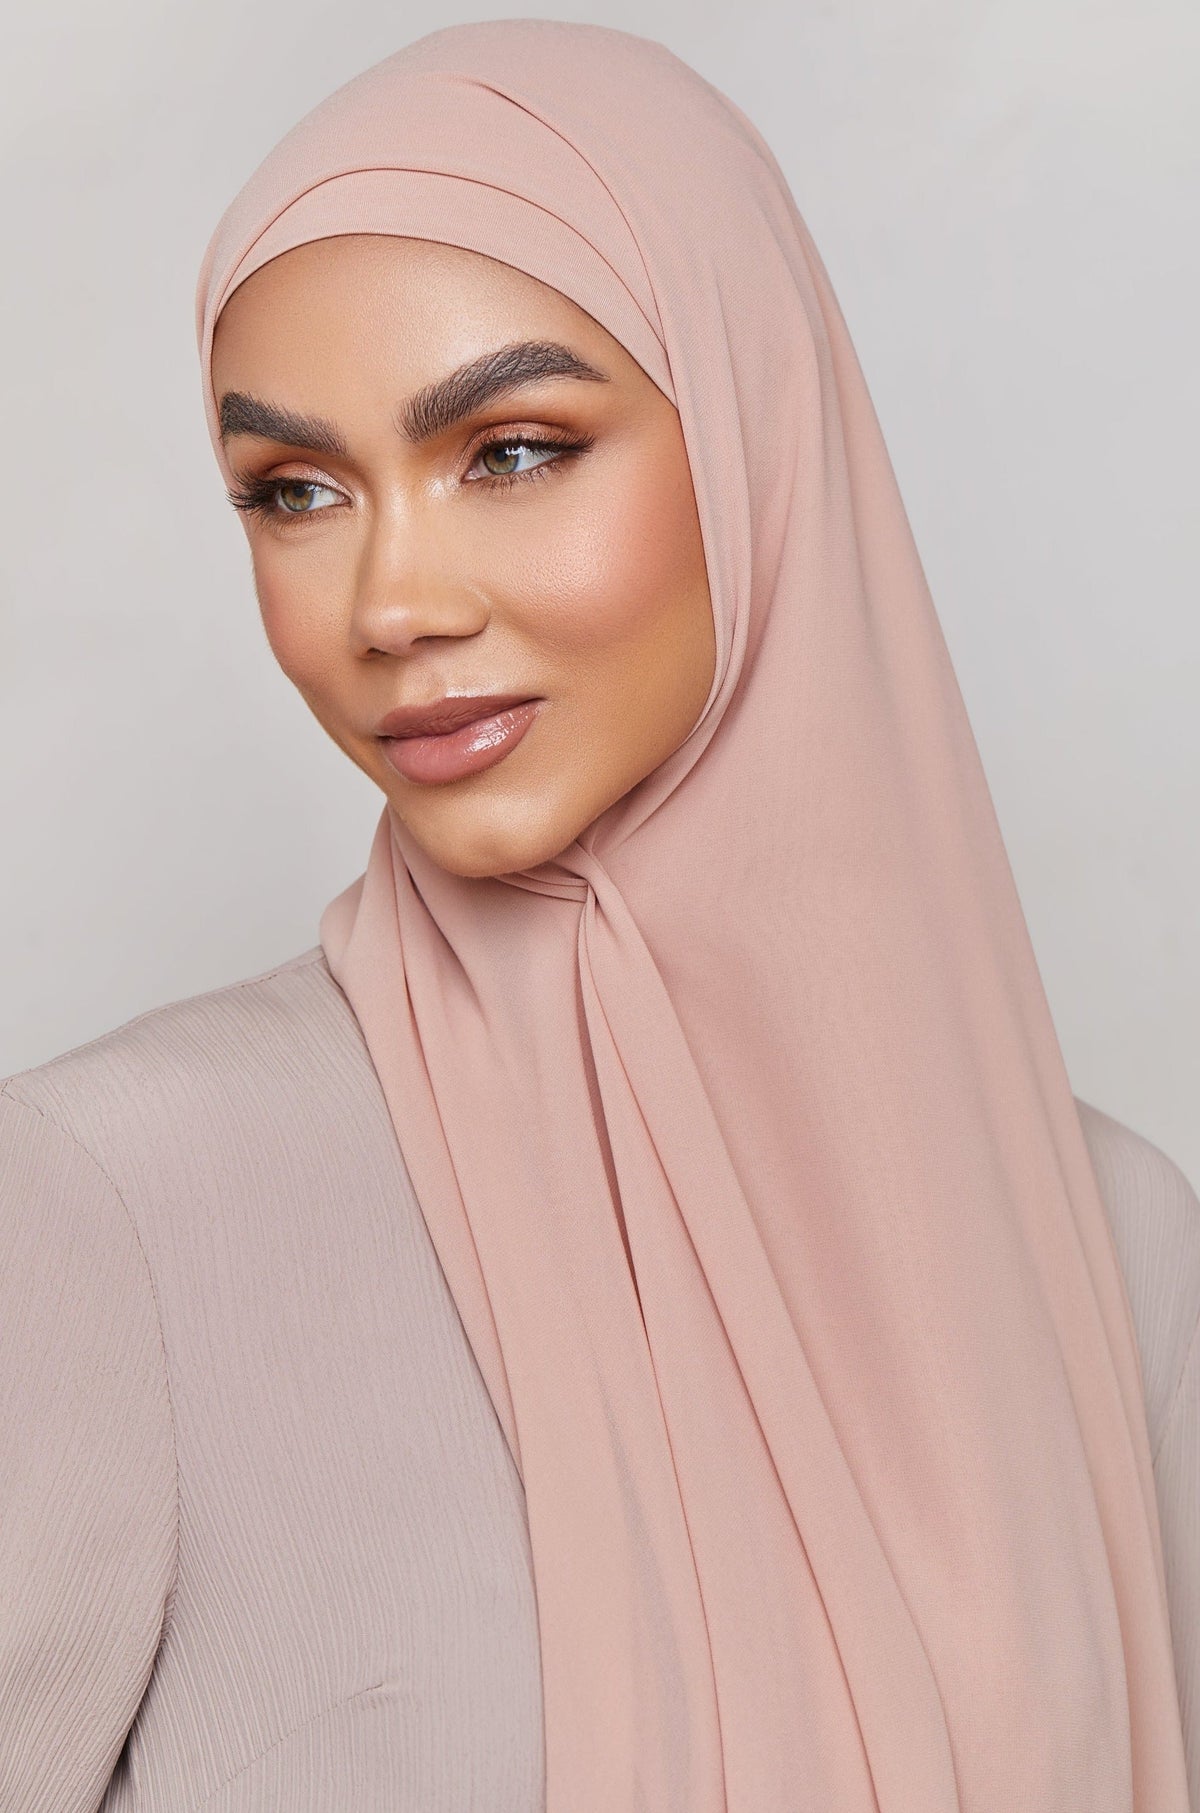 Chiffon LITE Hijab - Mahogany Rose epschoolboard 